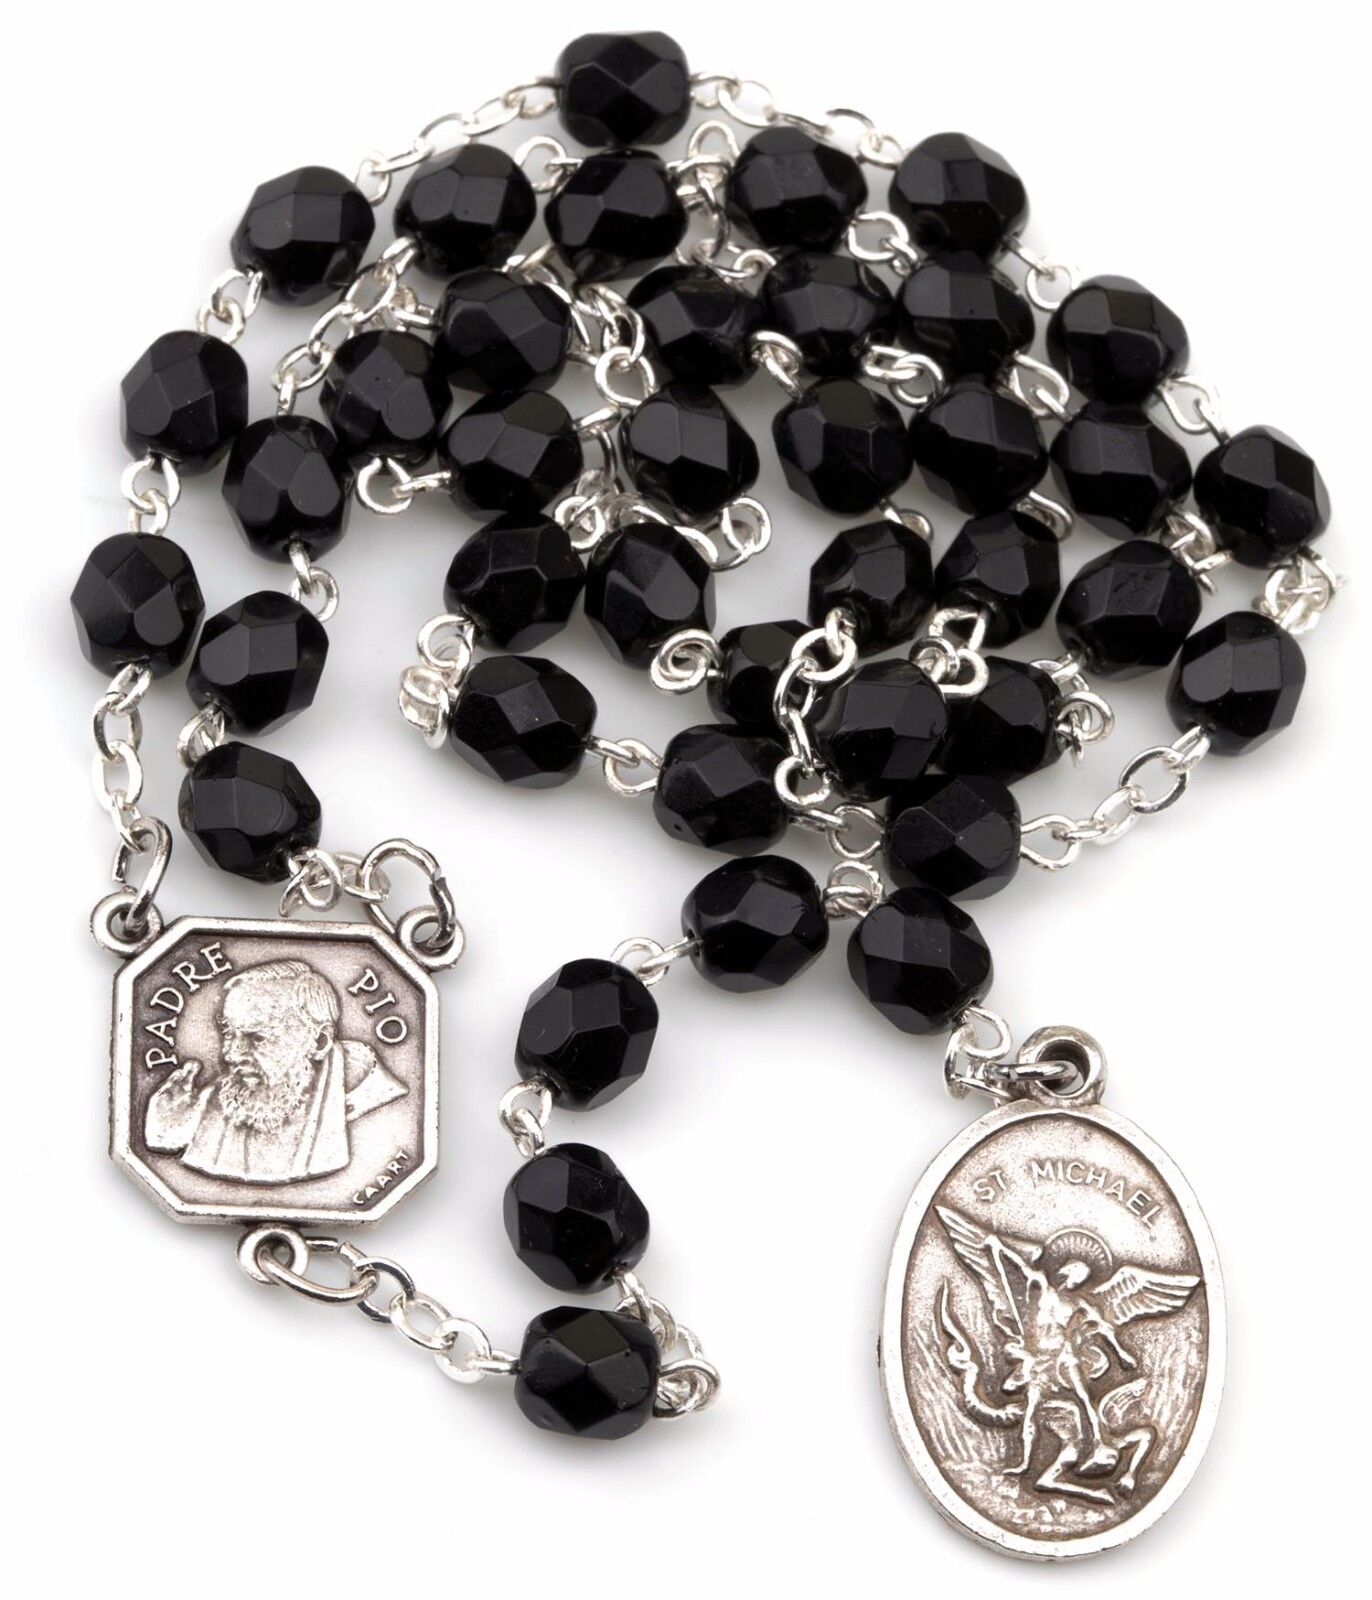 Jet Black St Saint Michael Padre Pio Guardian Angel Rosary Beads Chaplet 6MM